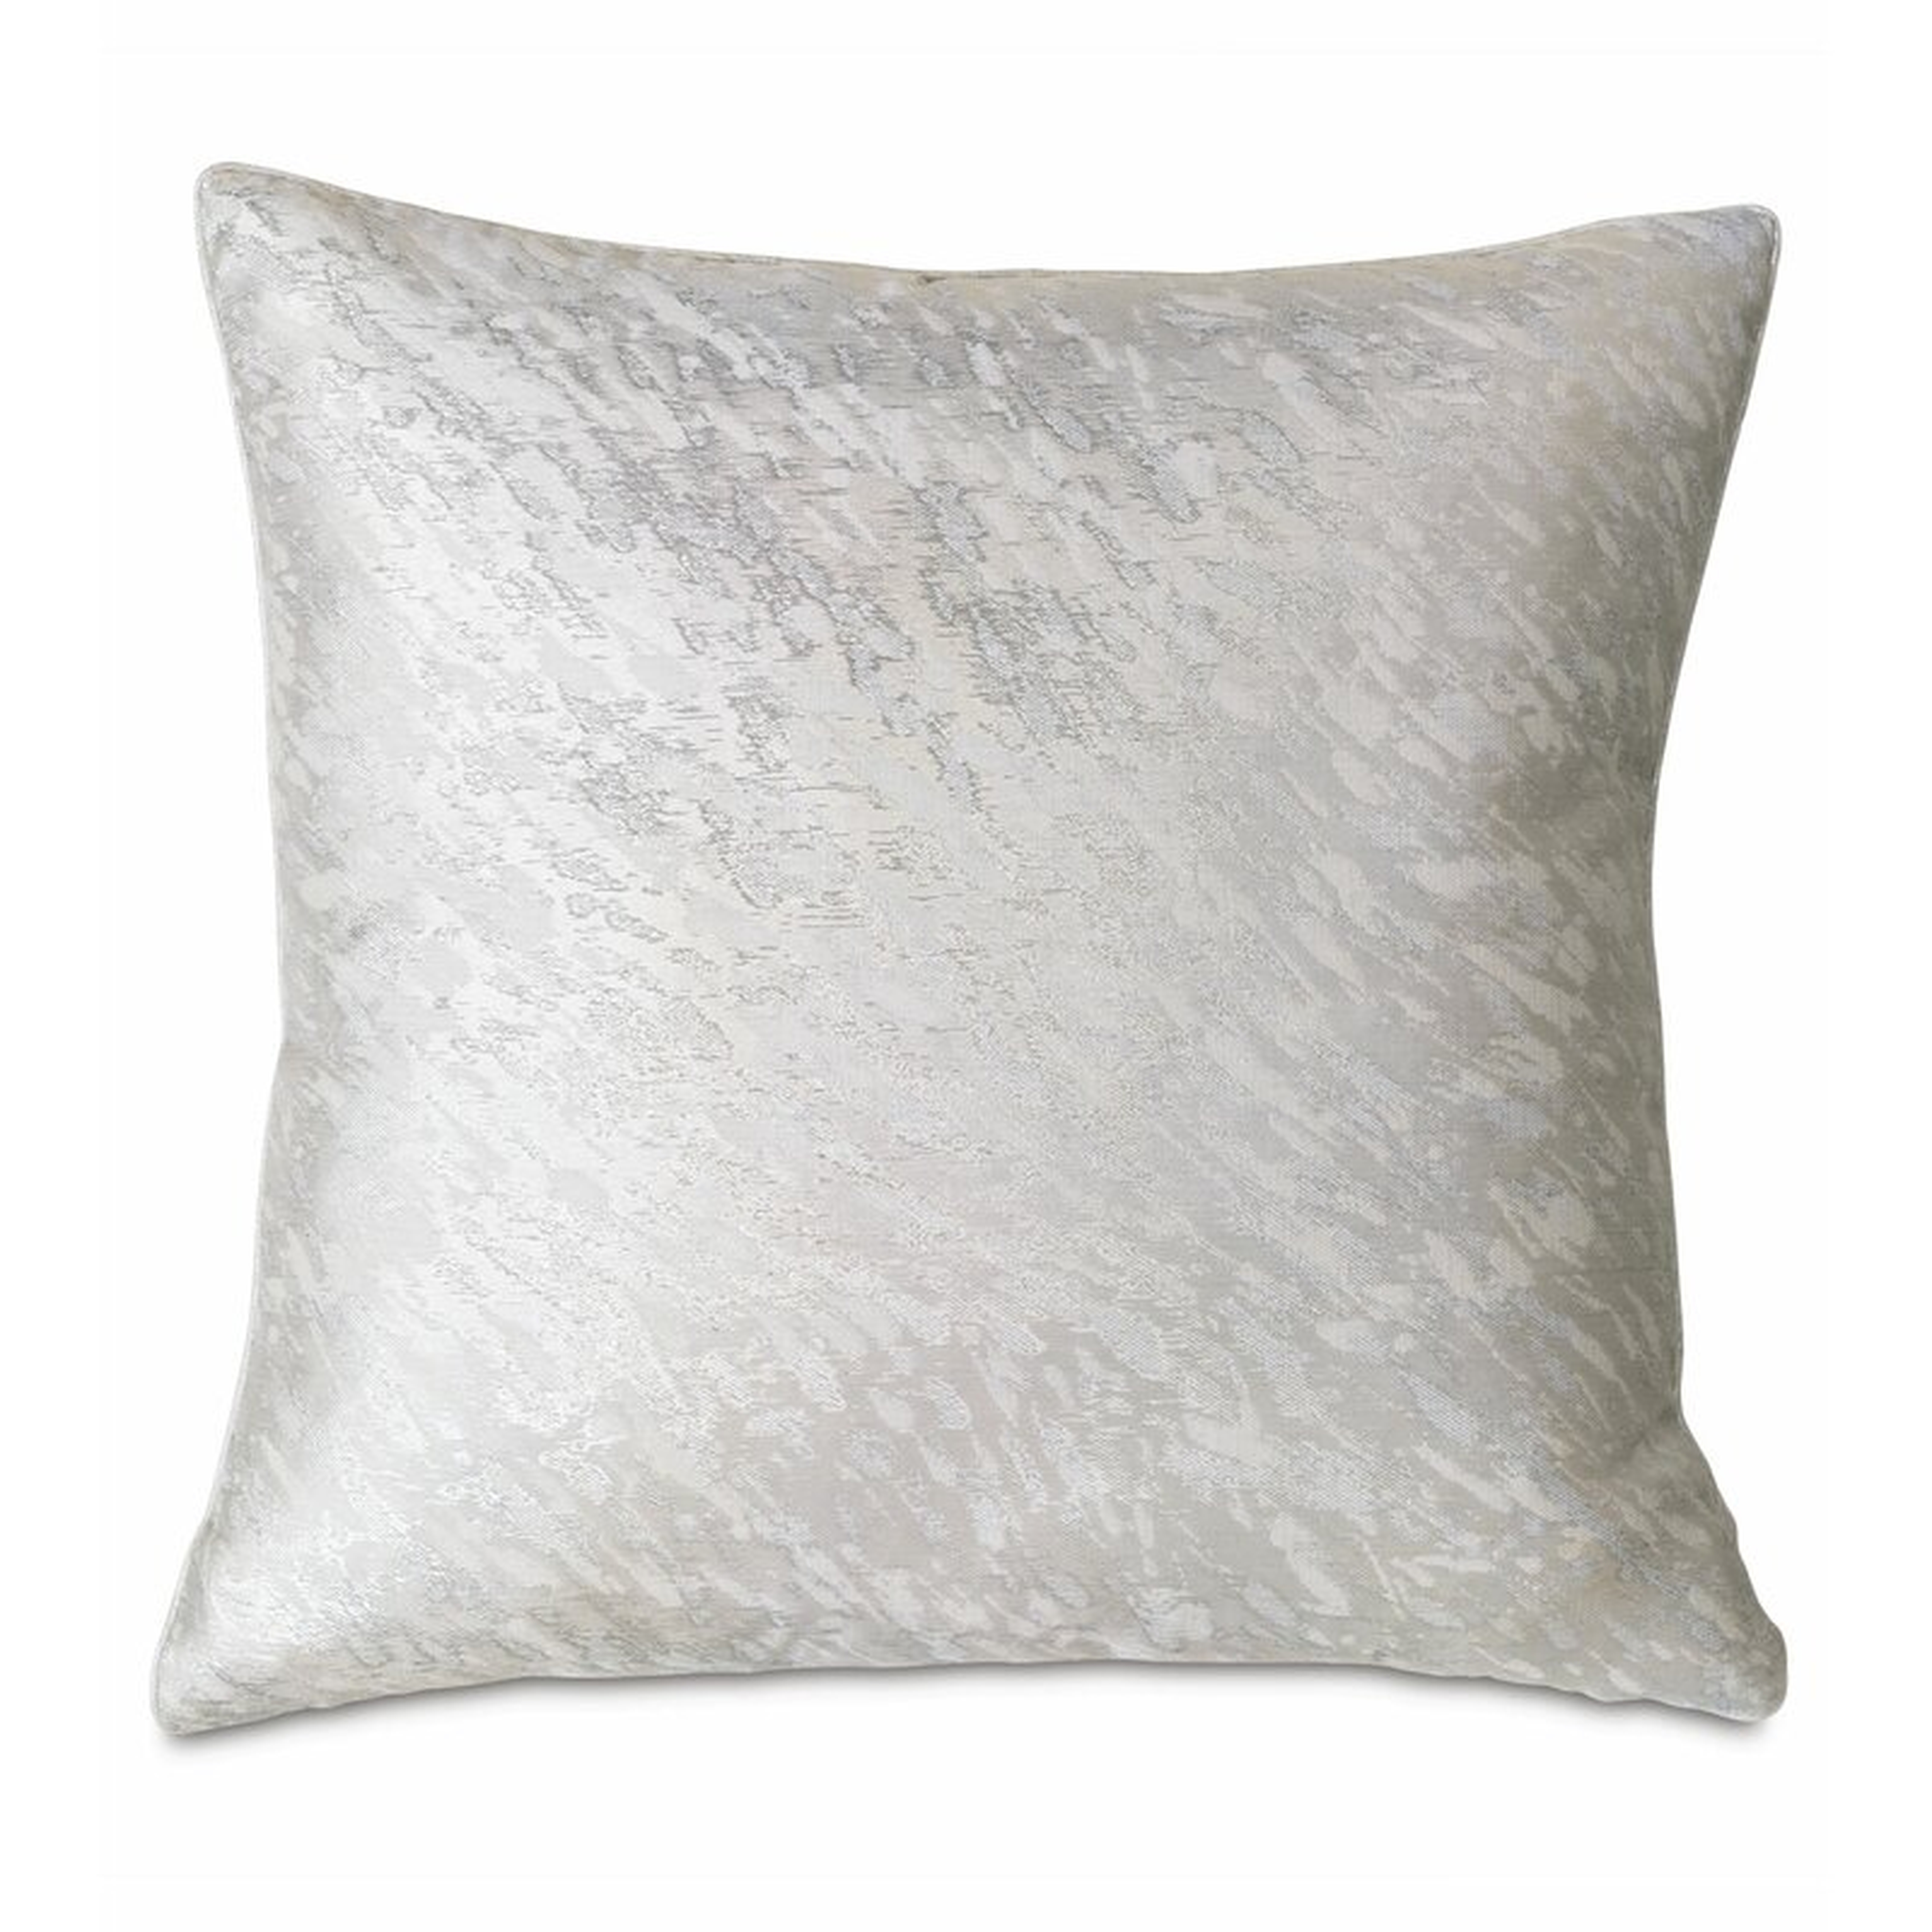 Eastern Accents Vionnet Metallic Woven Throw Pillow Cover & Insert - Perigold